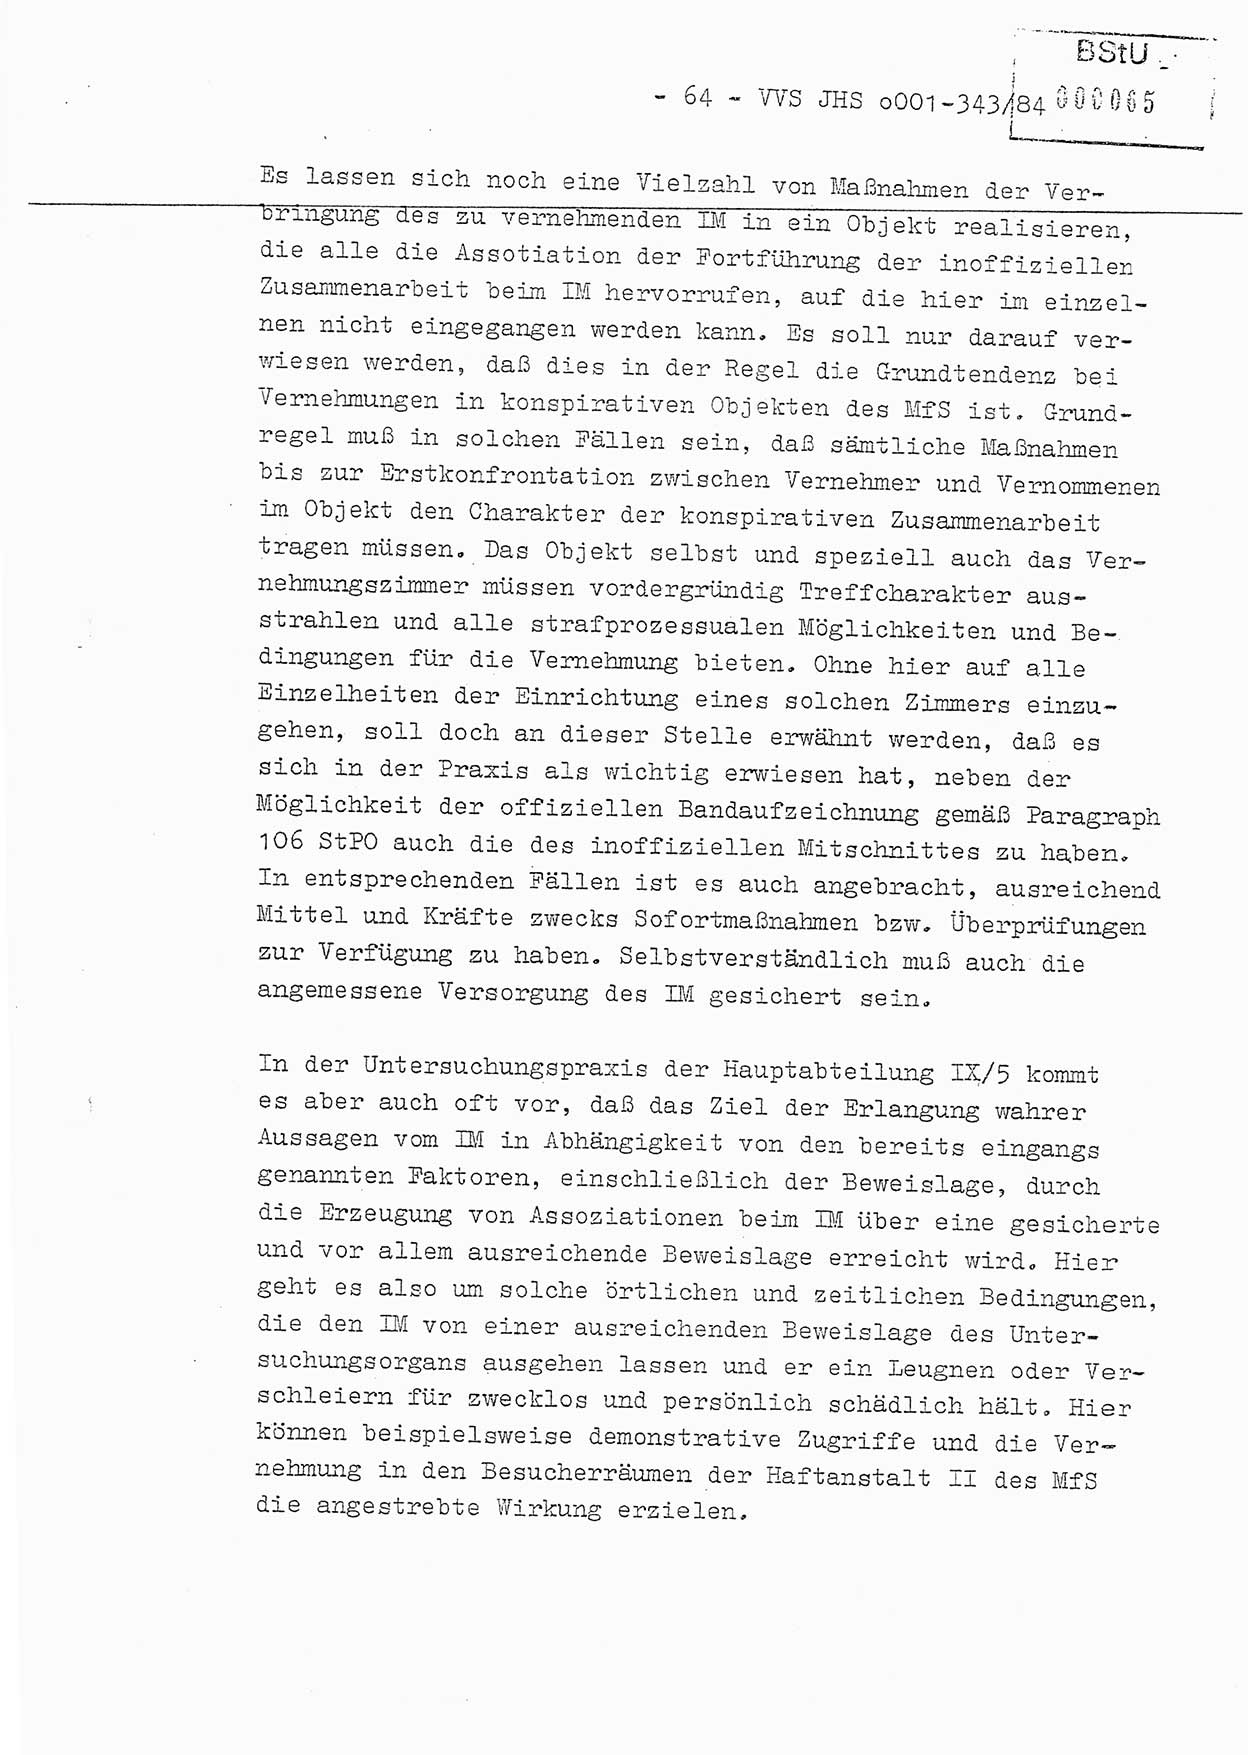 Diplomarbeit, Oberleutnant Bernd Michael (HA Ⅸ/5), Oberleutnant Peter Felber (HA IX/5), Ministerium für Staatssicherheit (MfS) [Deutsche Demokratische Republik (DDR)], Juristische Hochschule (JHS), Vertrauliche Verschlußsache (VVS) o001-343/84, Potsdam 1985, Seite 64 (Dipl.-Arb. MfS DDR JHS VVS o001-343/84 1985, S. 64)